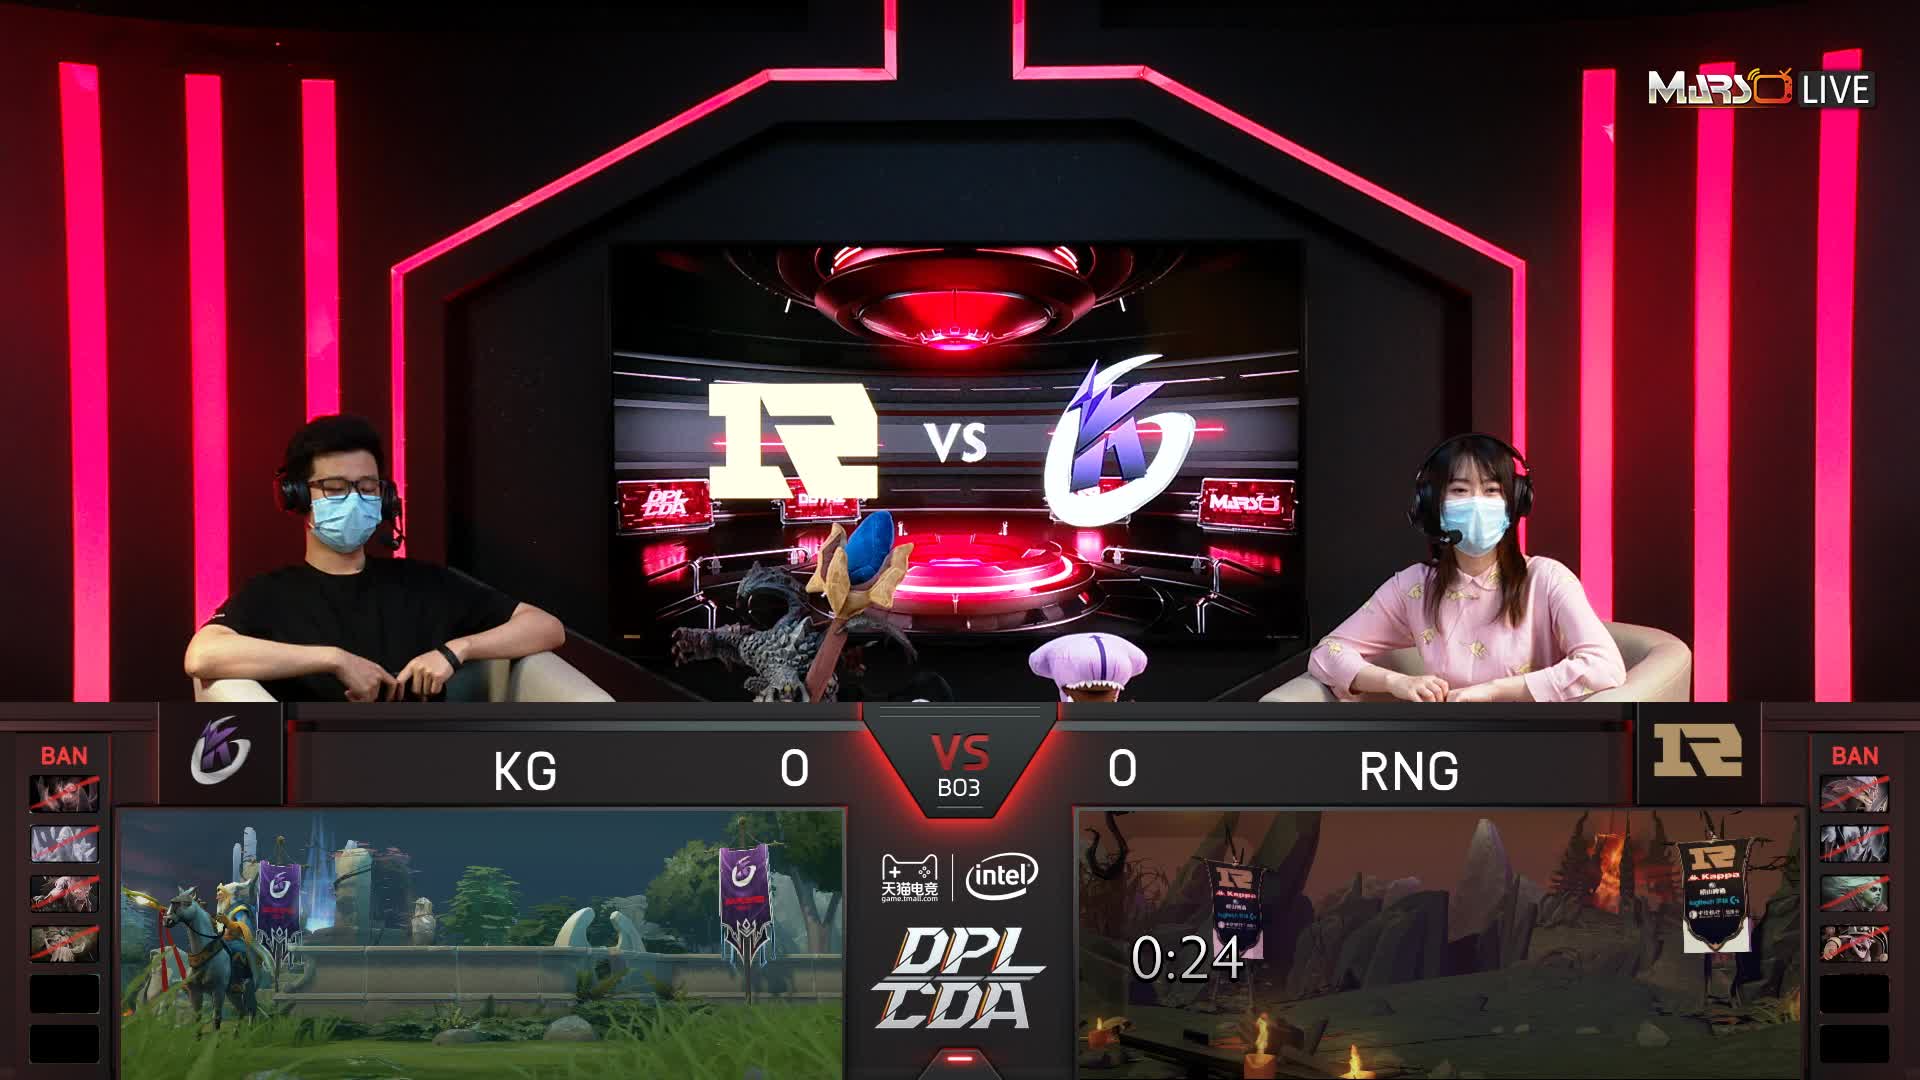 RNG vs KG DPL-CDA小组赛